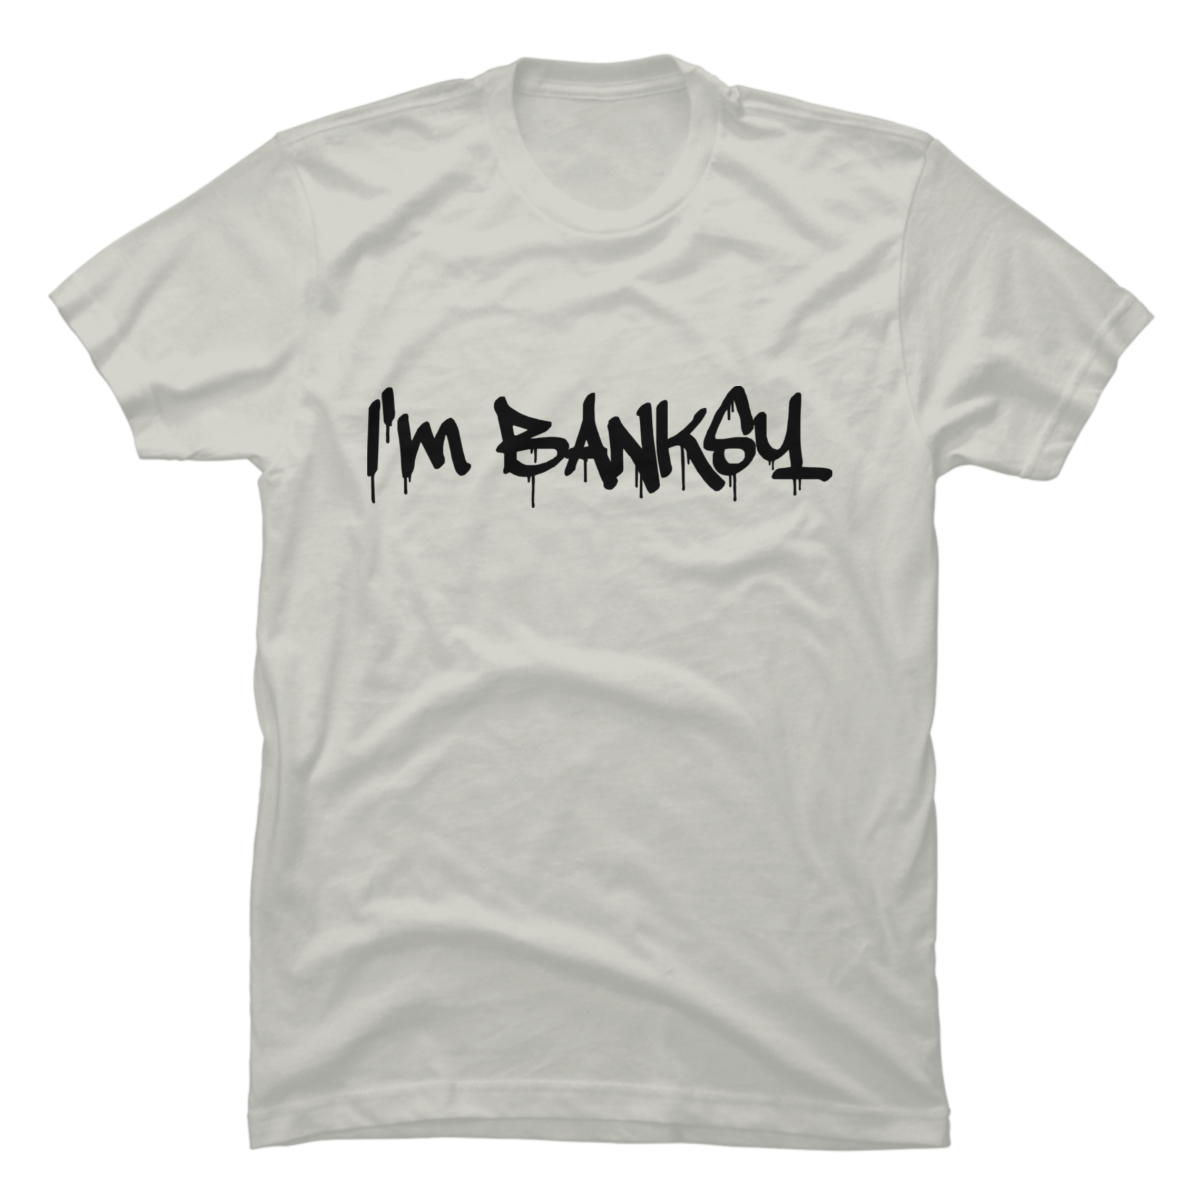 i am banksy shirt